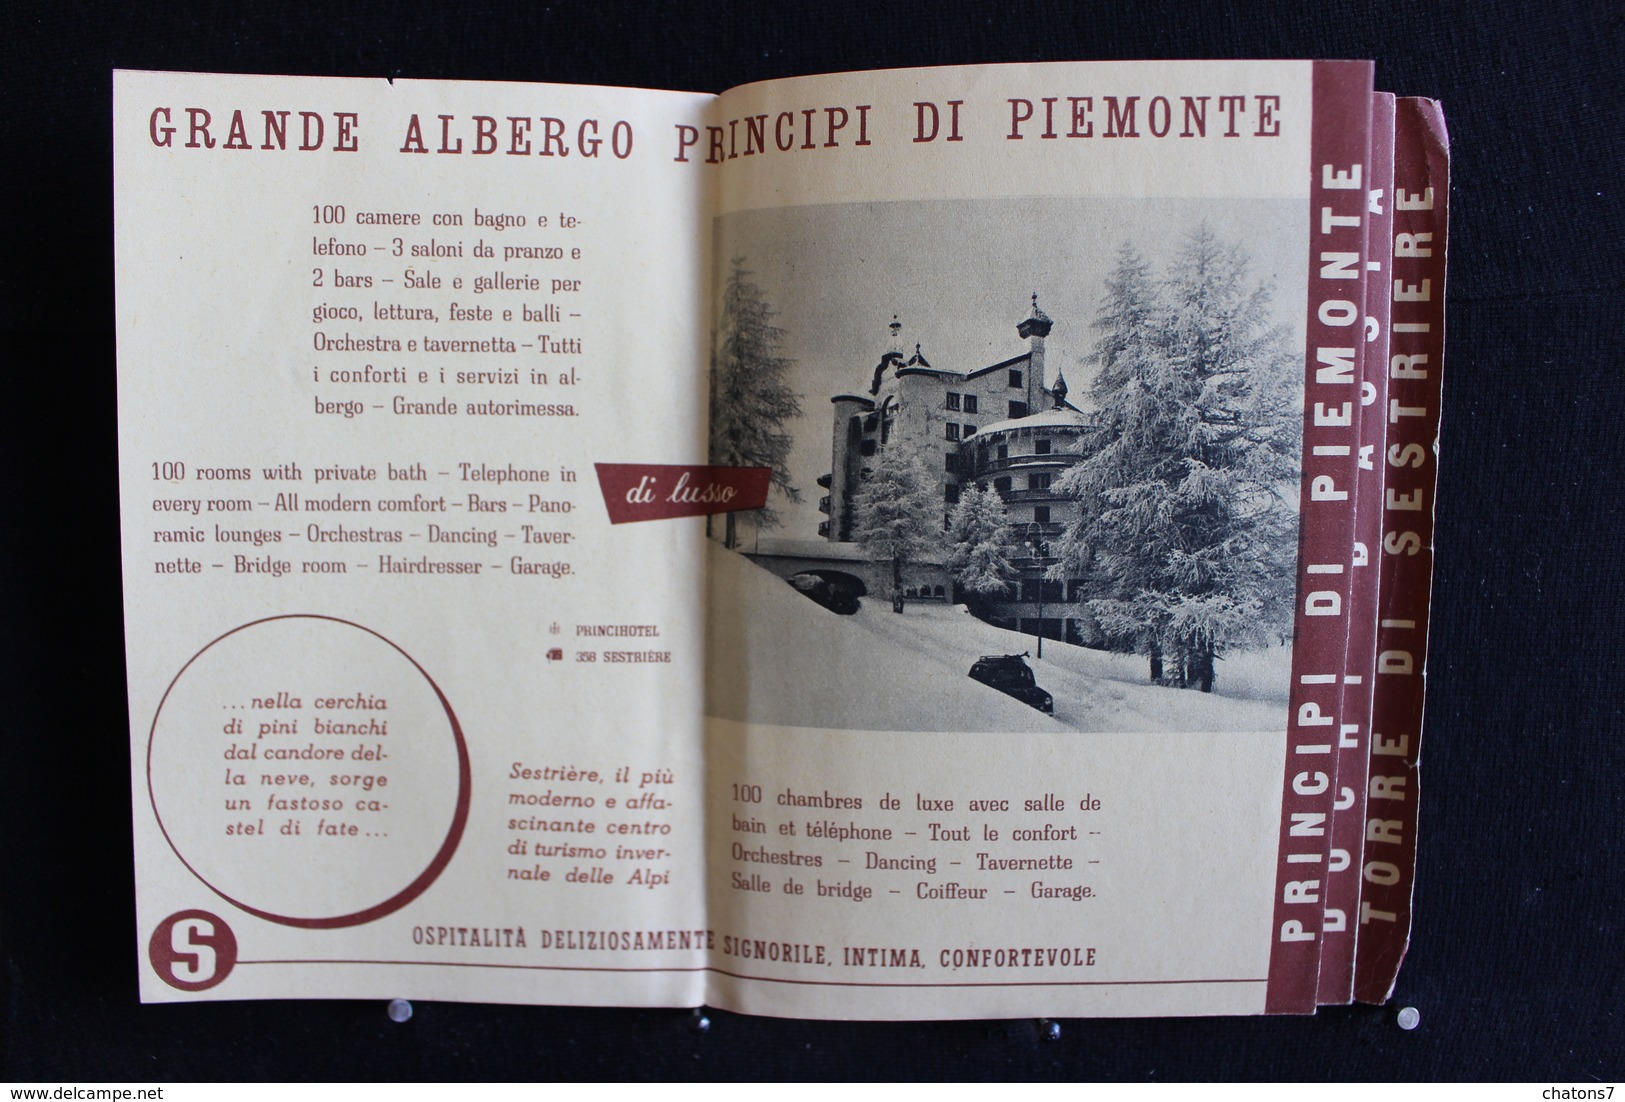 Wih / Italie Piemonte Torino (Turin) / Fraiteve Banchetta Sises - Grande Albergo Principi Di Piemonte / Circulé 1951 - Dépliants Touristiques